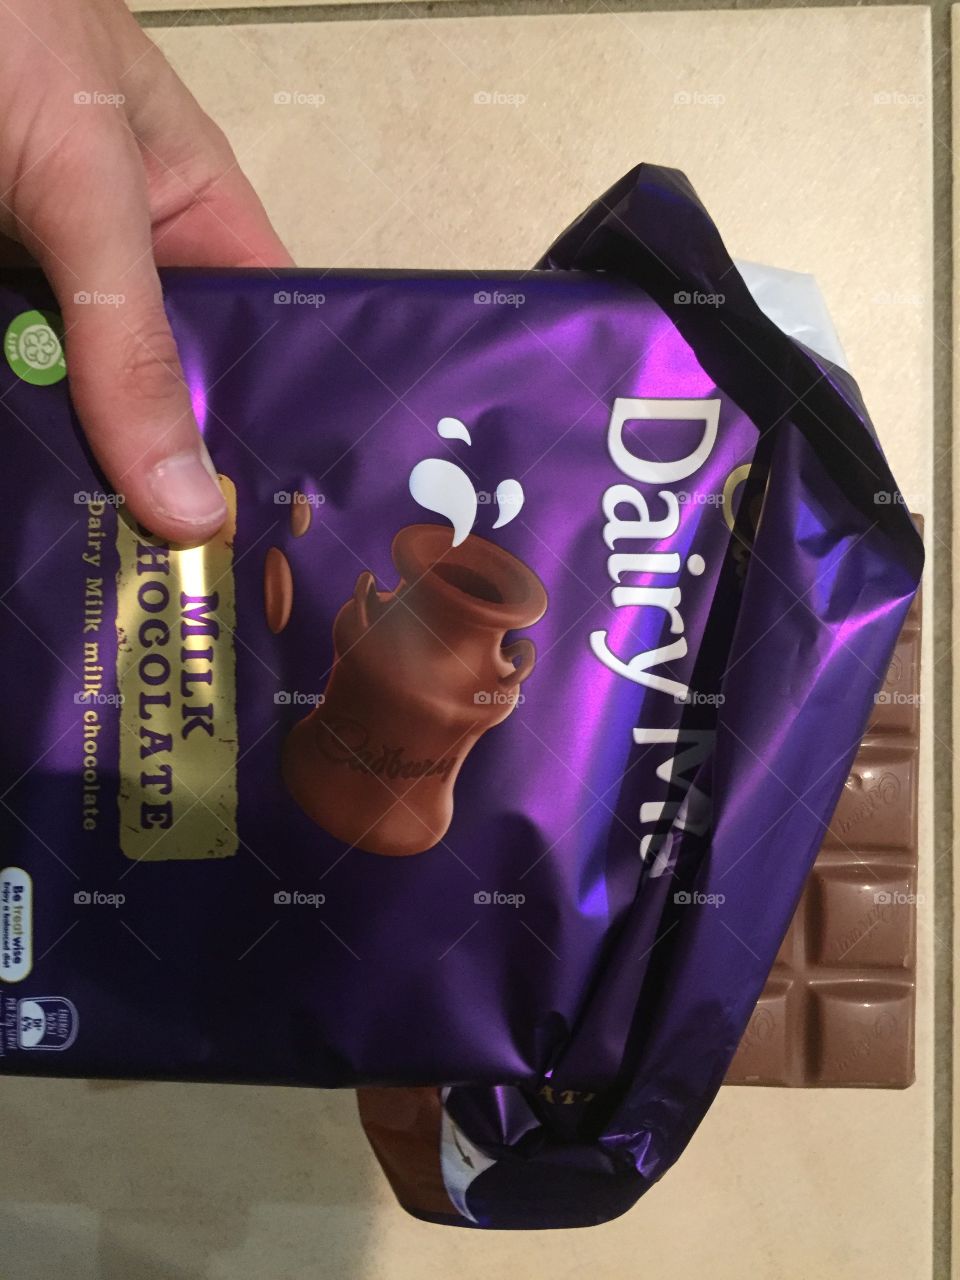 Chocolate opening